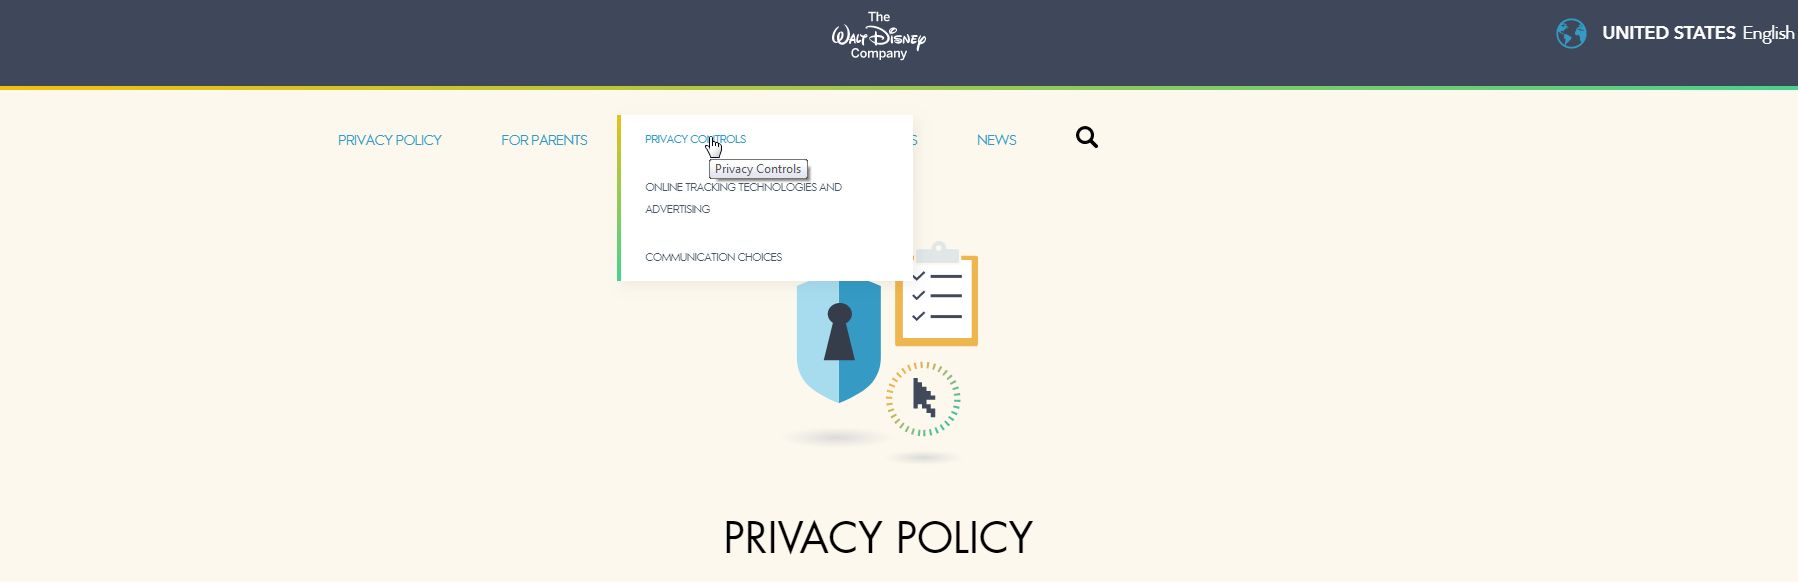 walt disney company privacy